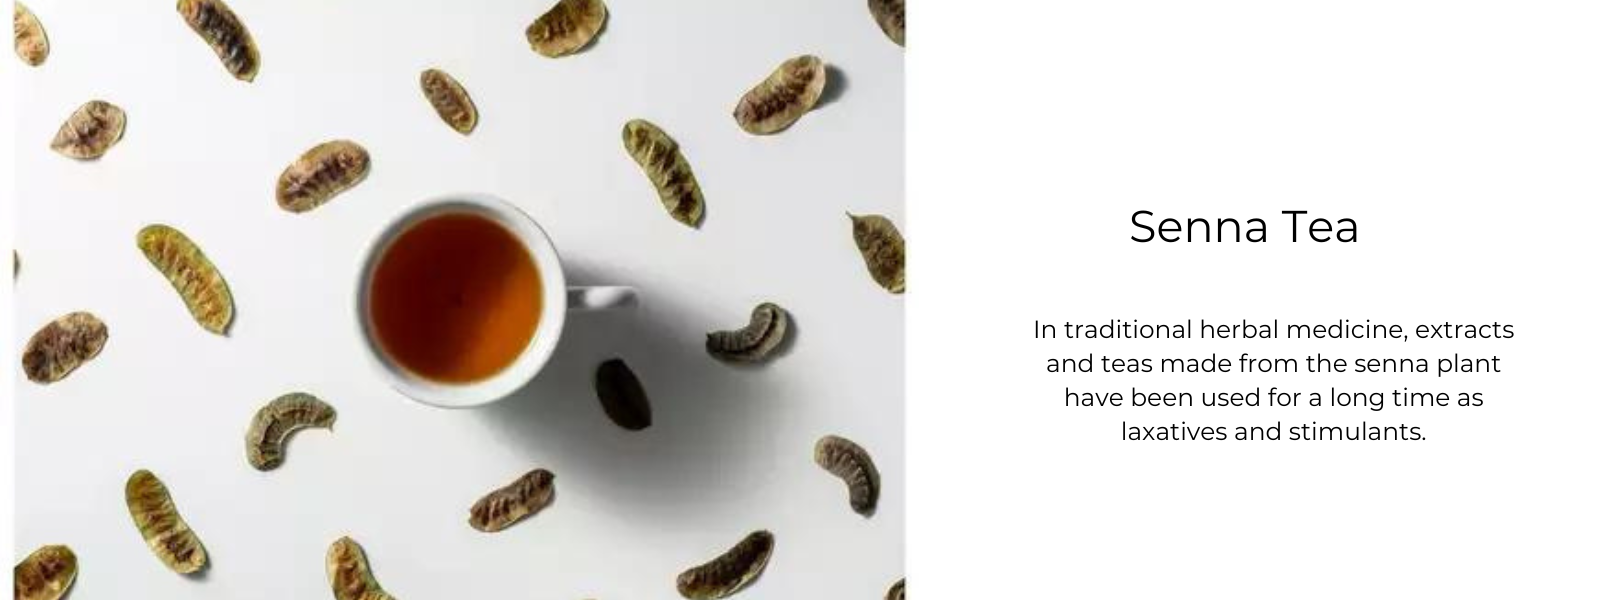 Senna Tea - Health Benefits, Uses and Important Facts